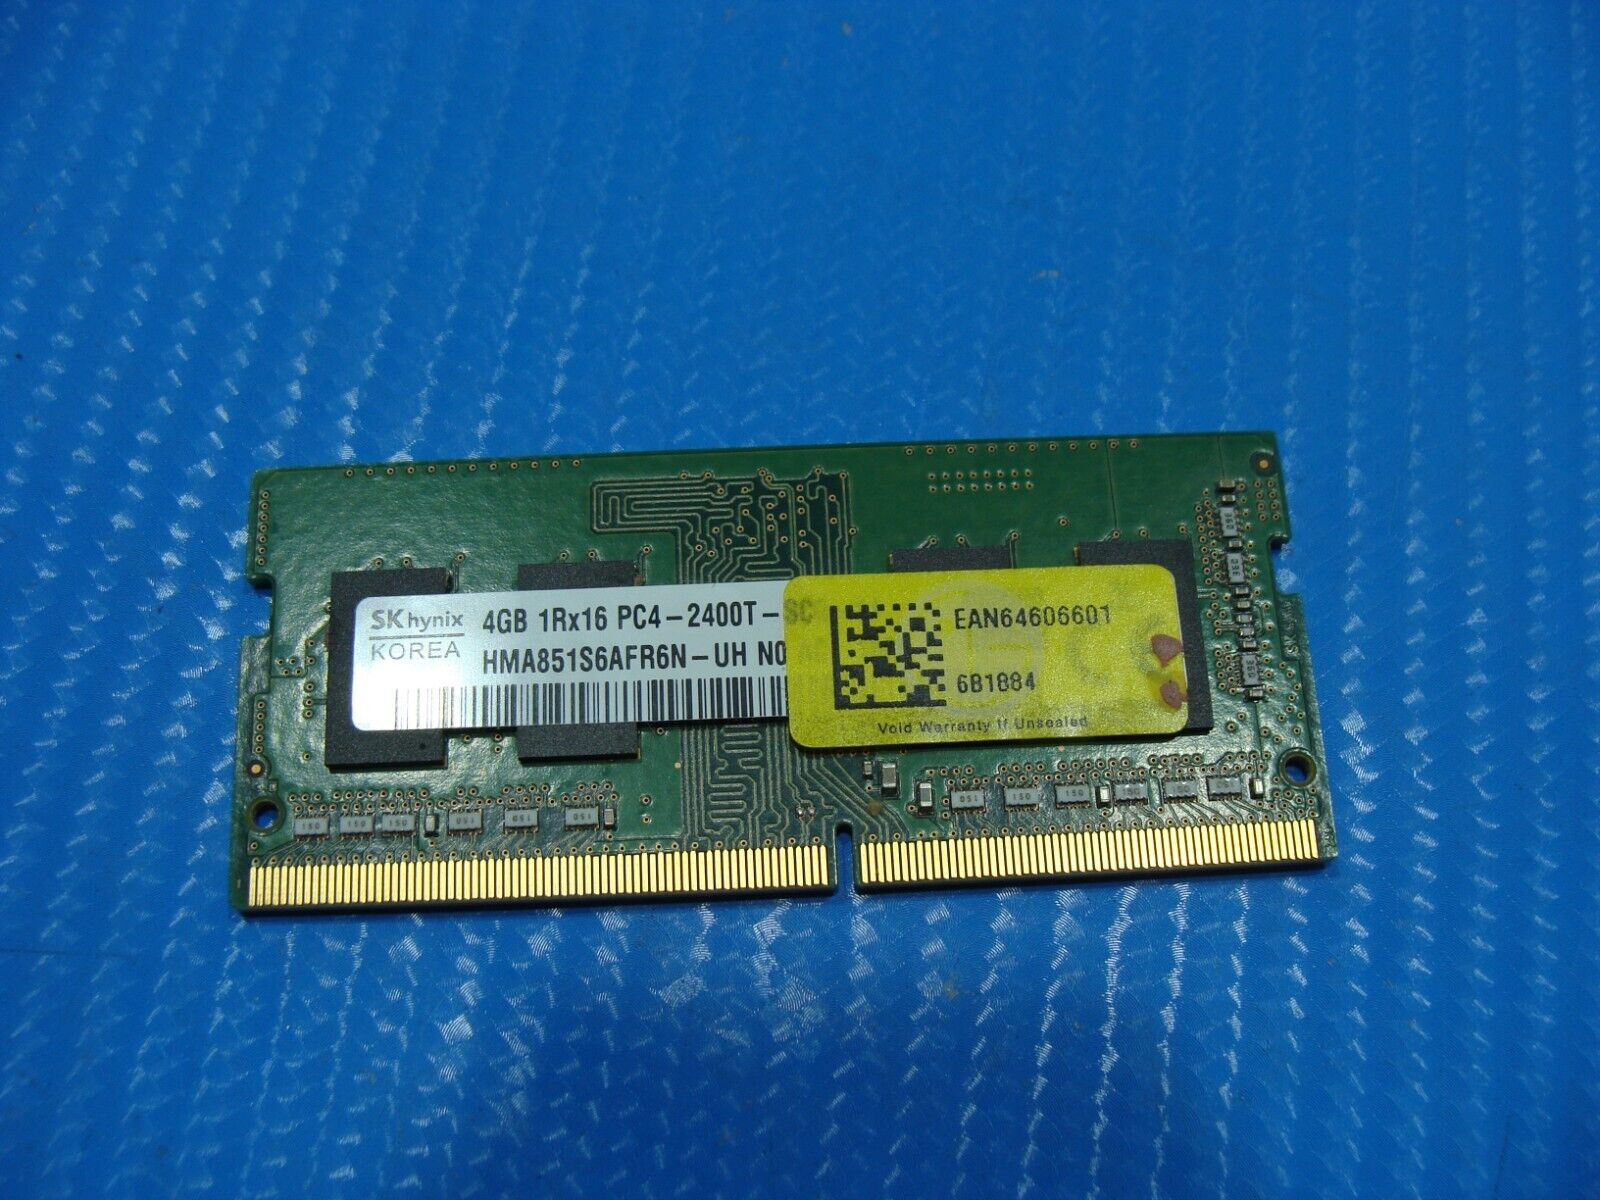 LG 14Z980 SK Hynix 4GB 1Rx16 PC4-2400T Memory RAM SO-DIMM HMA851S6AFR6N-UH